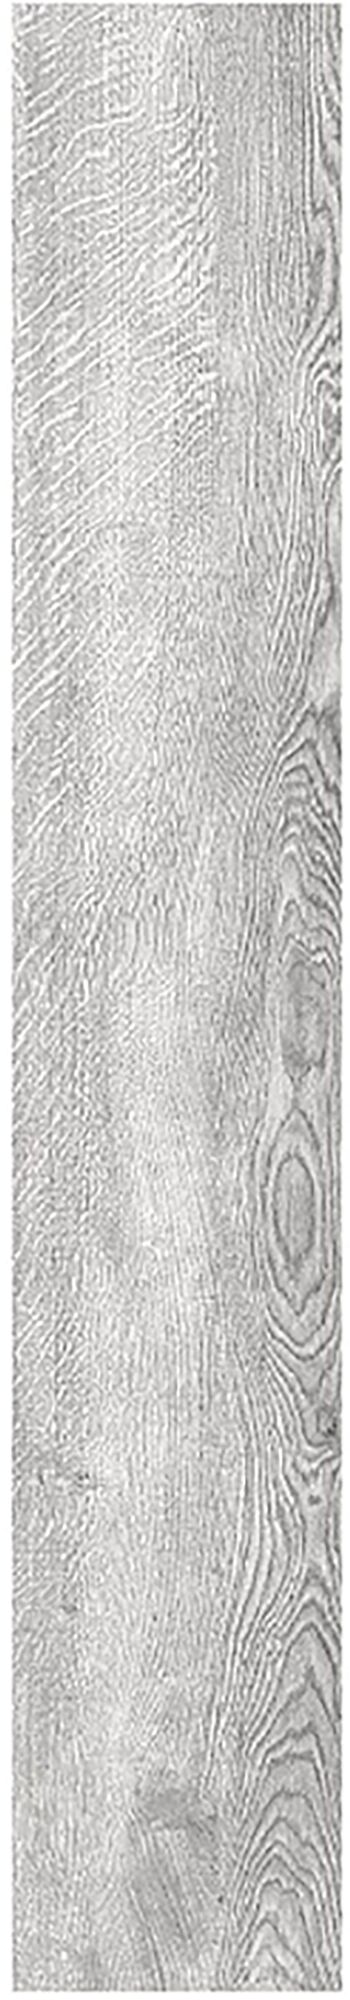 ГРАСАРО Фореста керамогранит 1200х200х10мм (7шт) (1,68м2) серый / GRASARO Foresta глазурованный керамогранит 1200х200х10